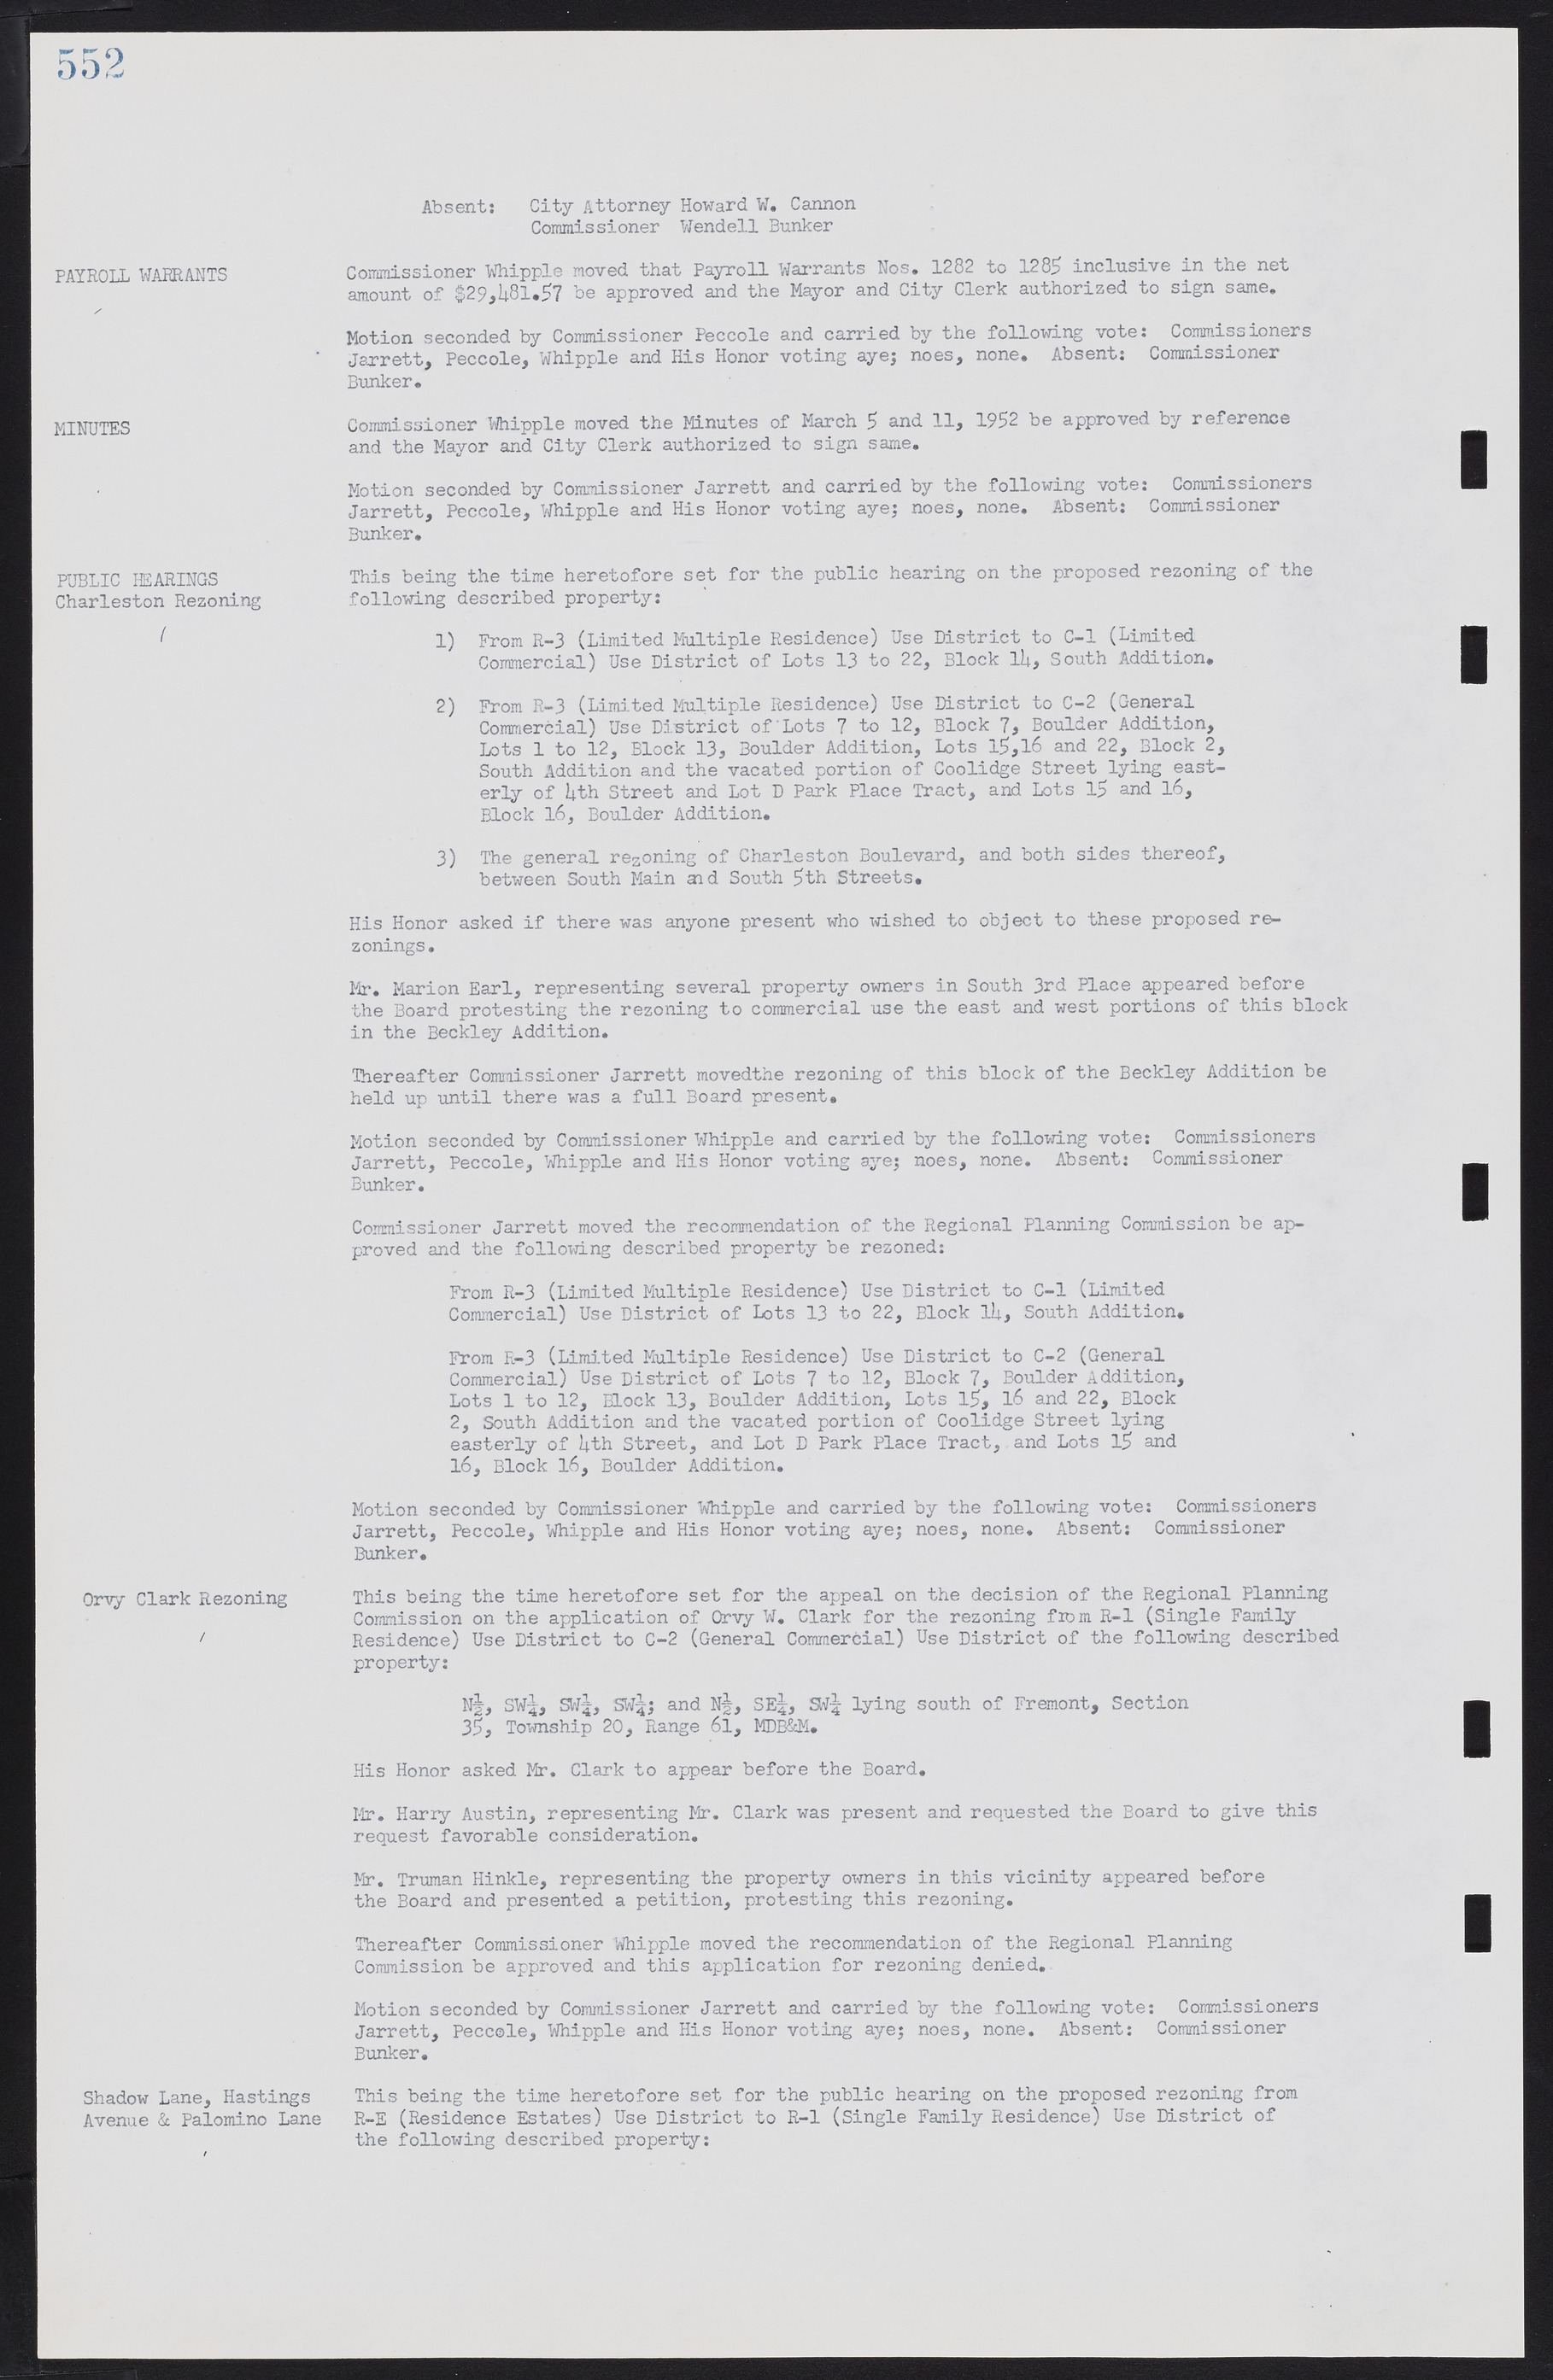 Las Vegas City Commission Minutes, November 7, 1949 to May 21, 1952, lvc000007-570